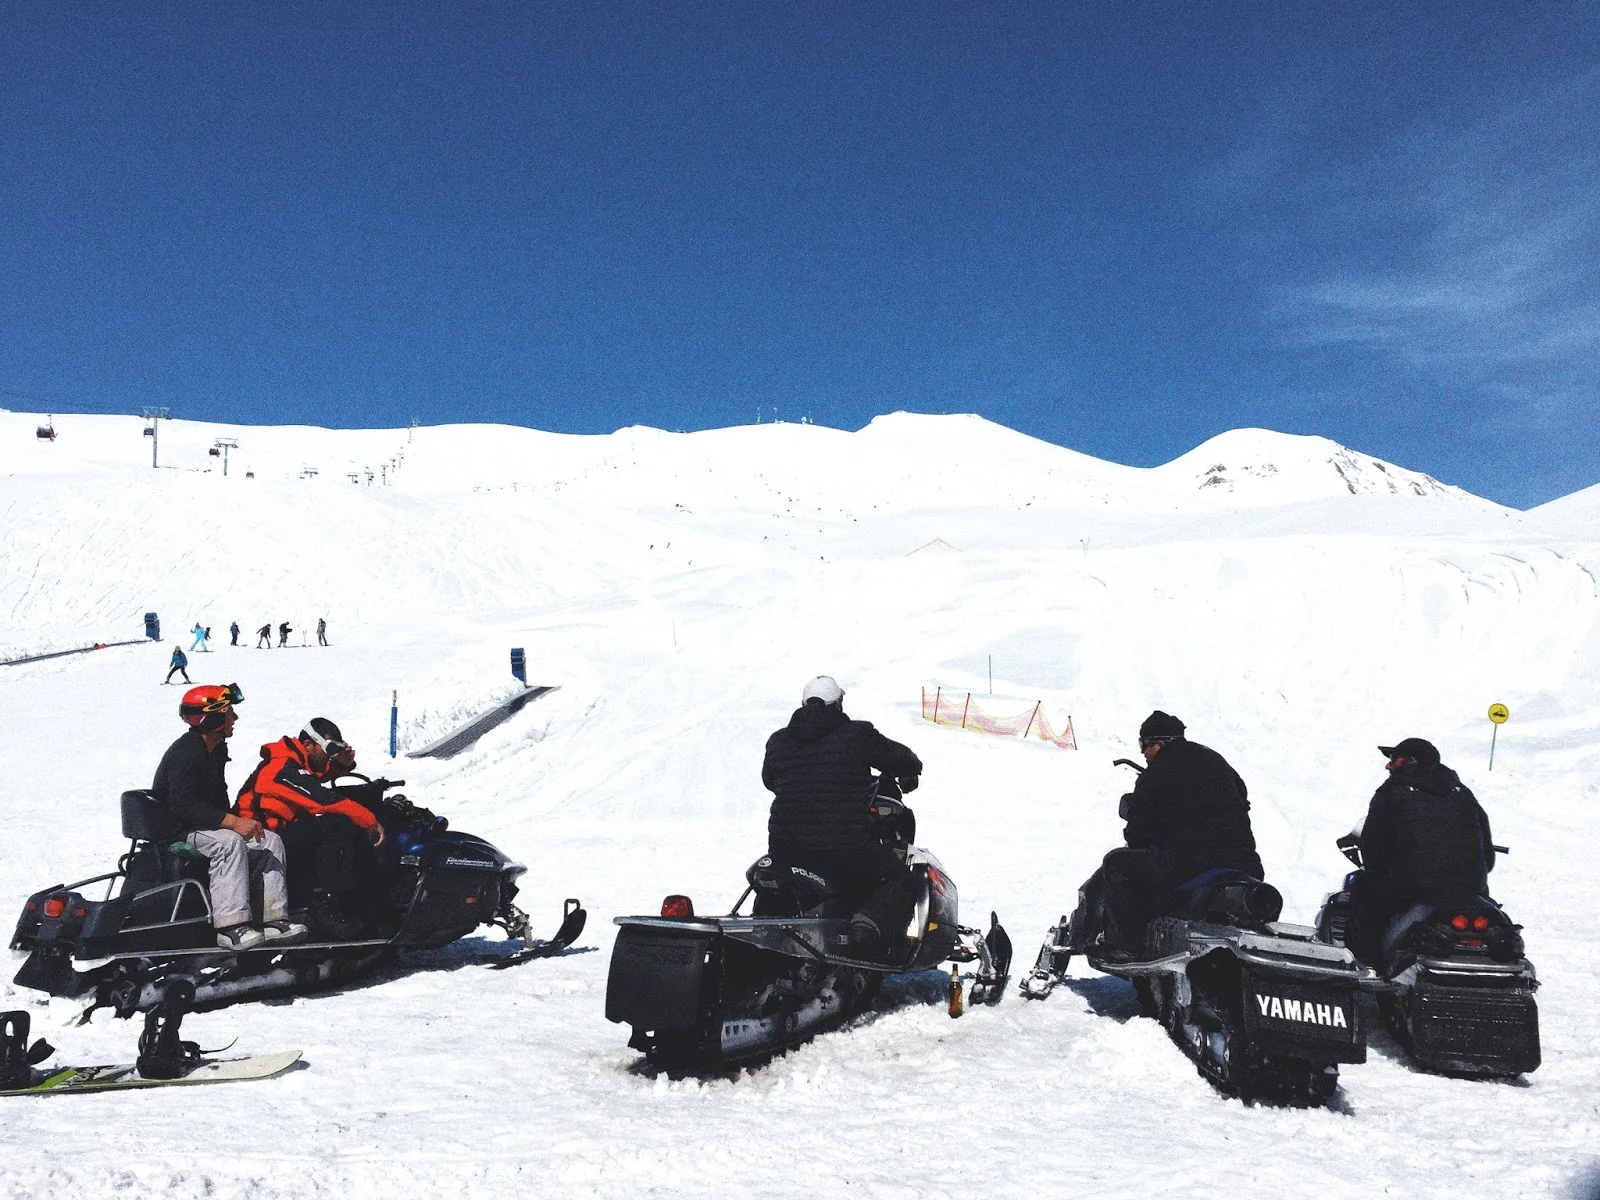 Gudauri Ski Resort photo